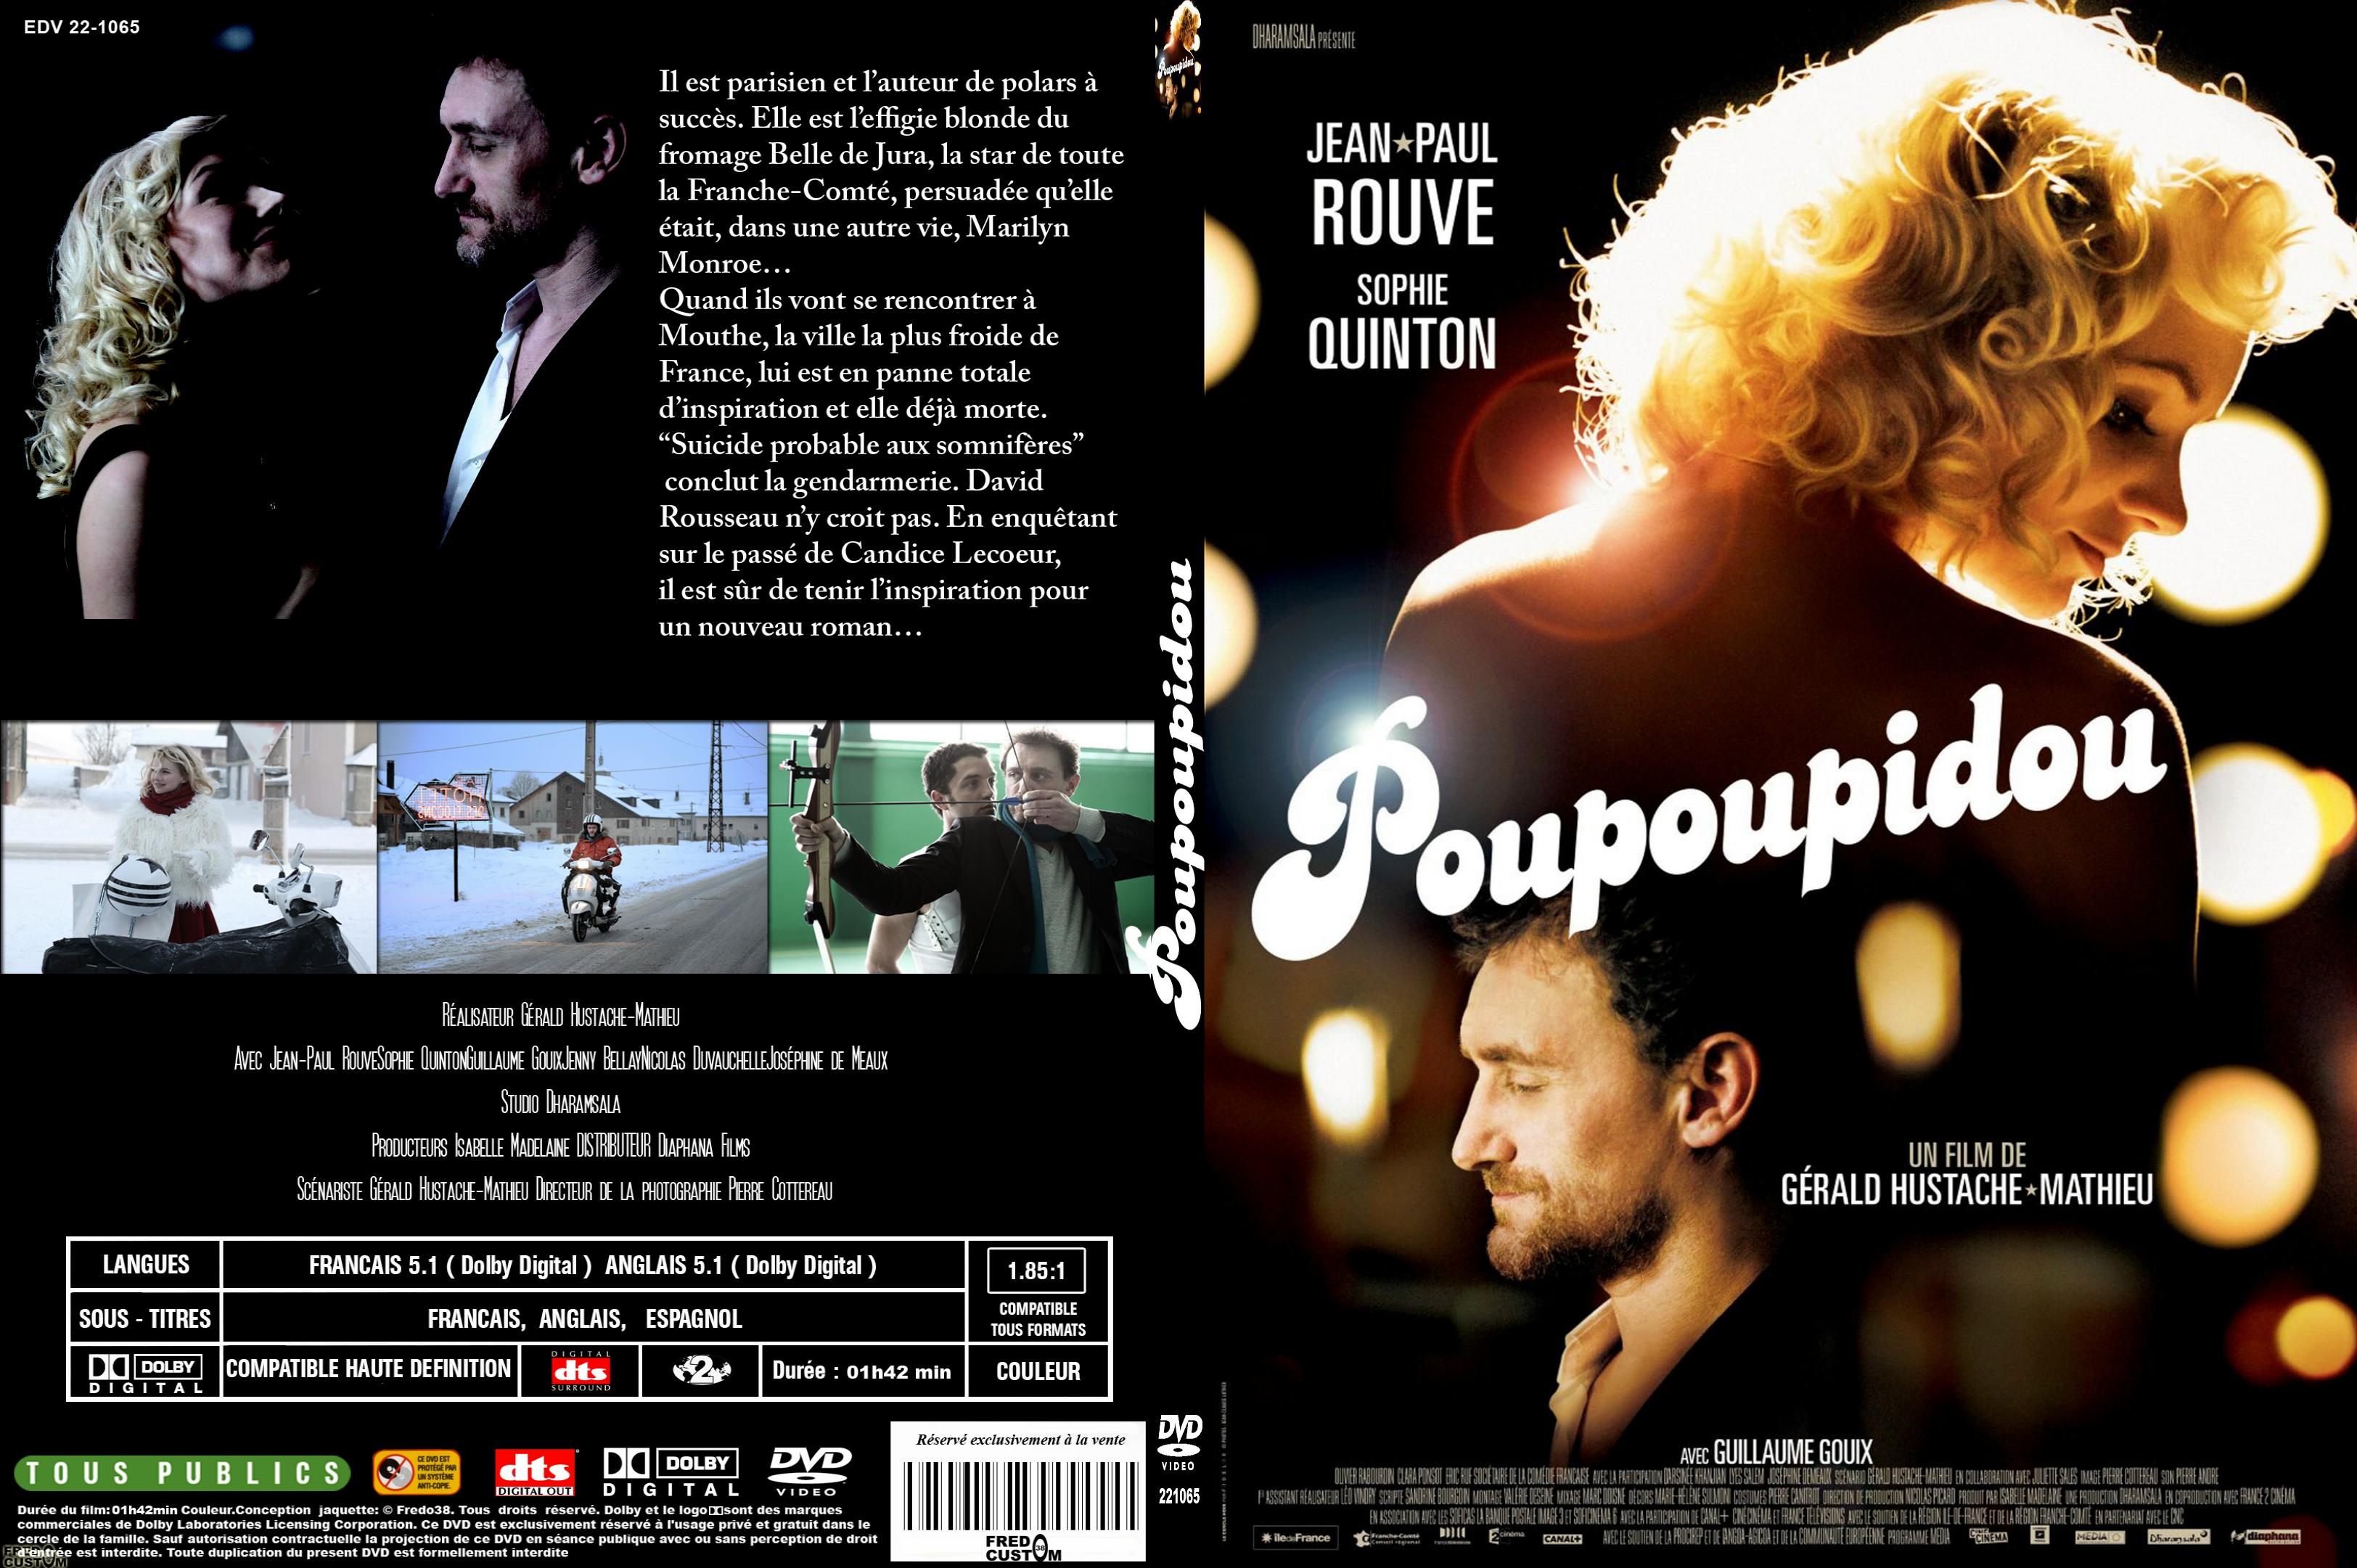 Jaquette DVD Poupoupidou custom - SLIM